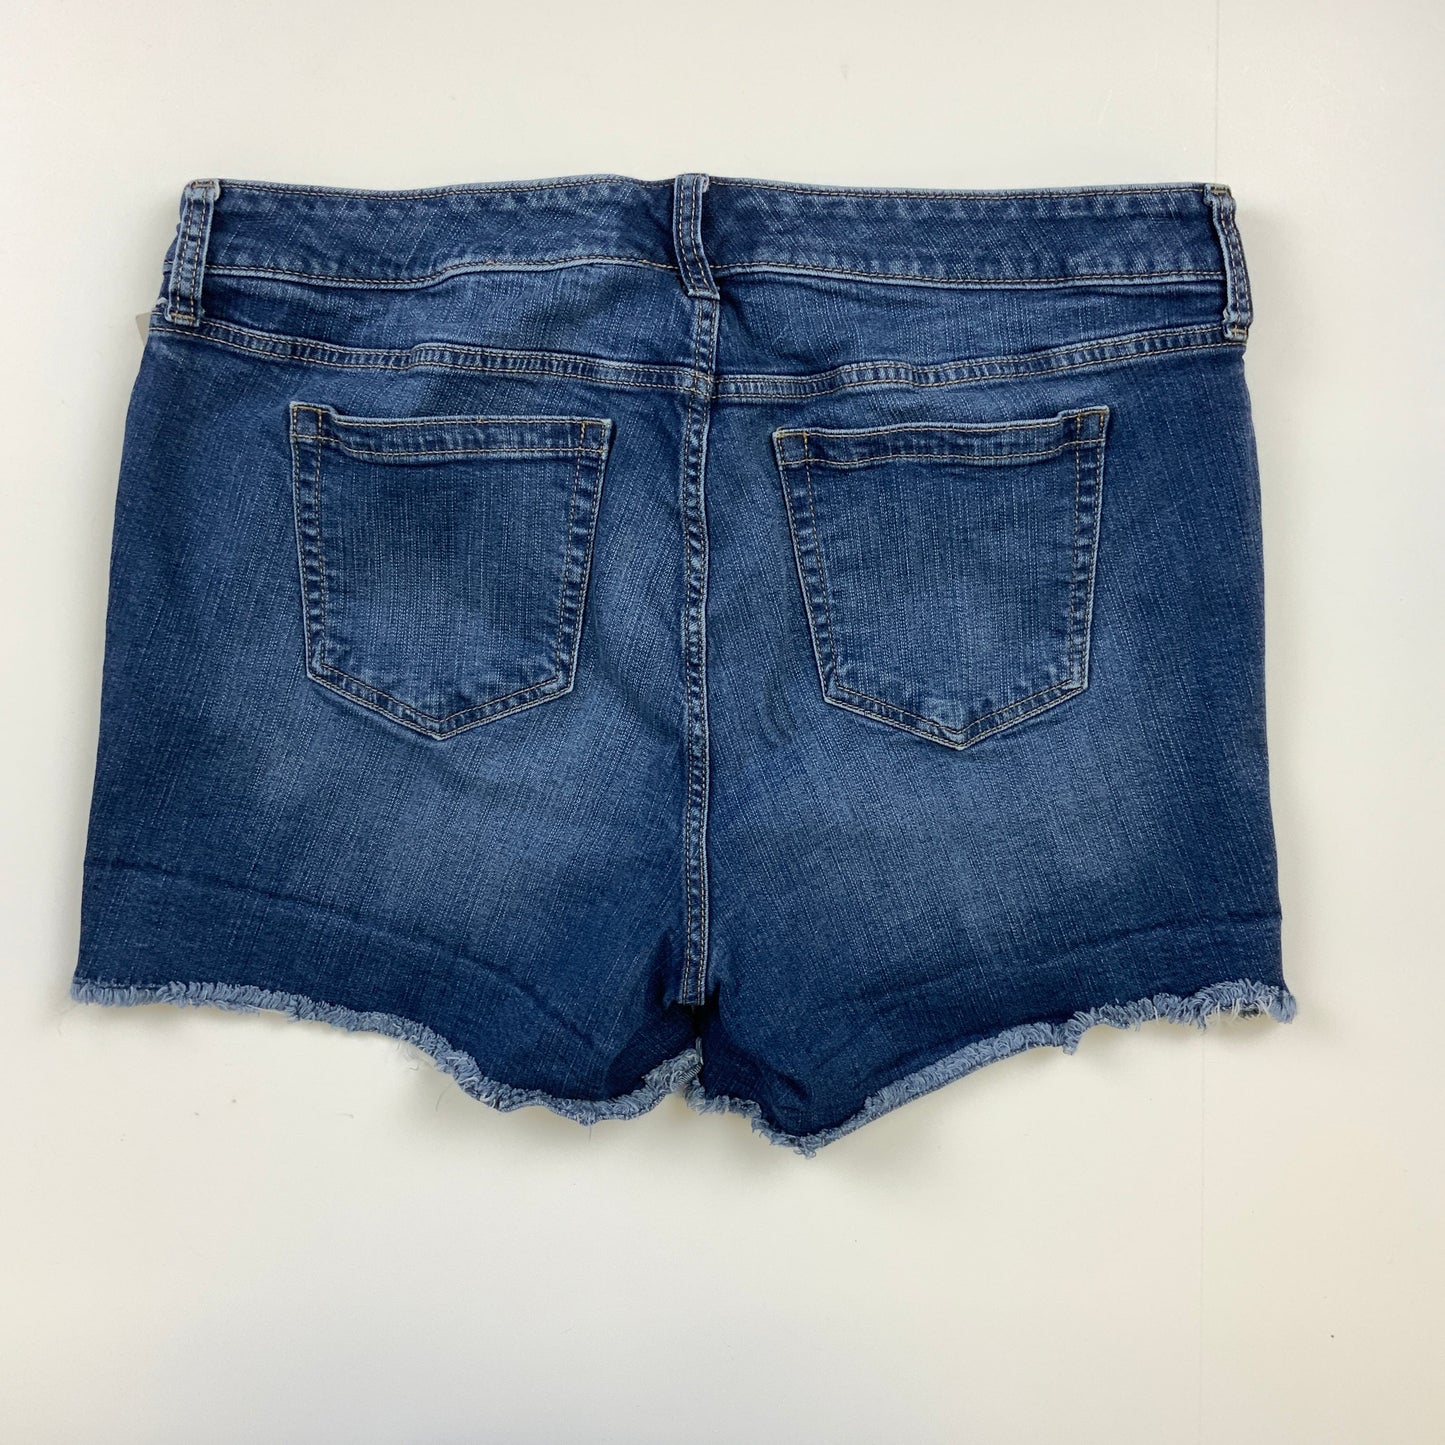 Blue Denim Shorts Torrid, Size 16